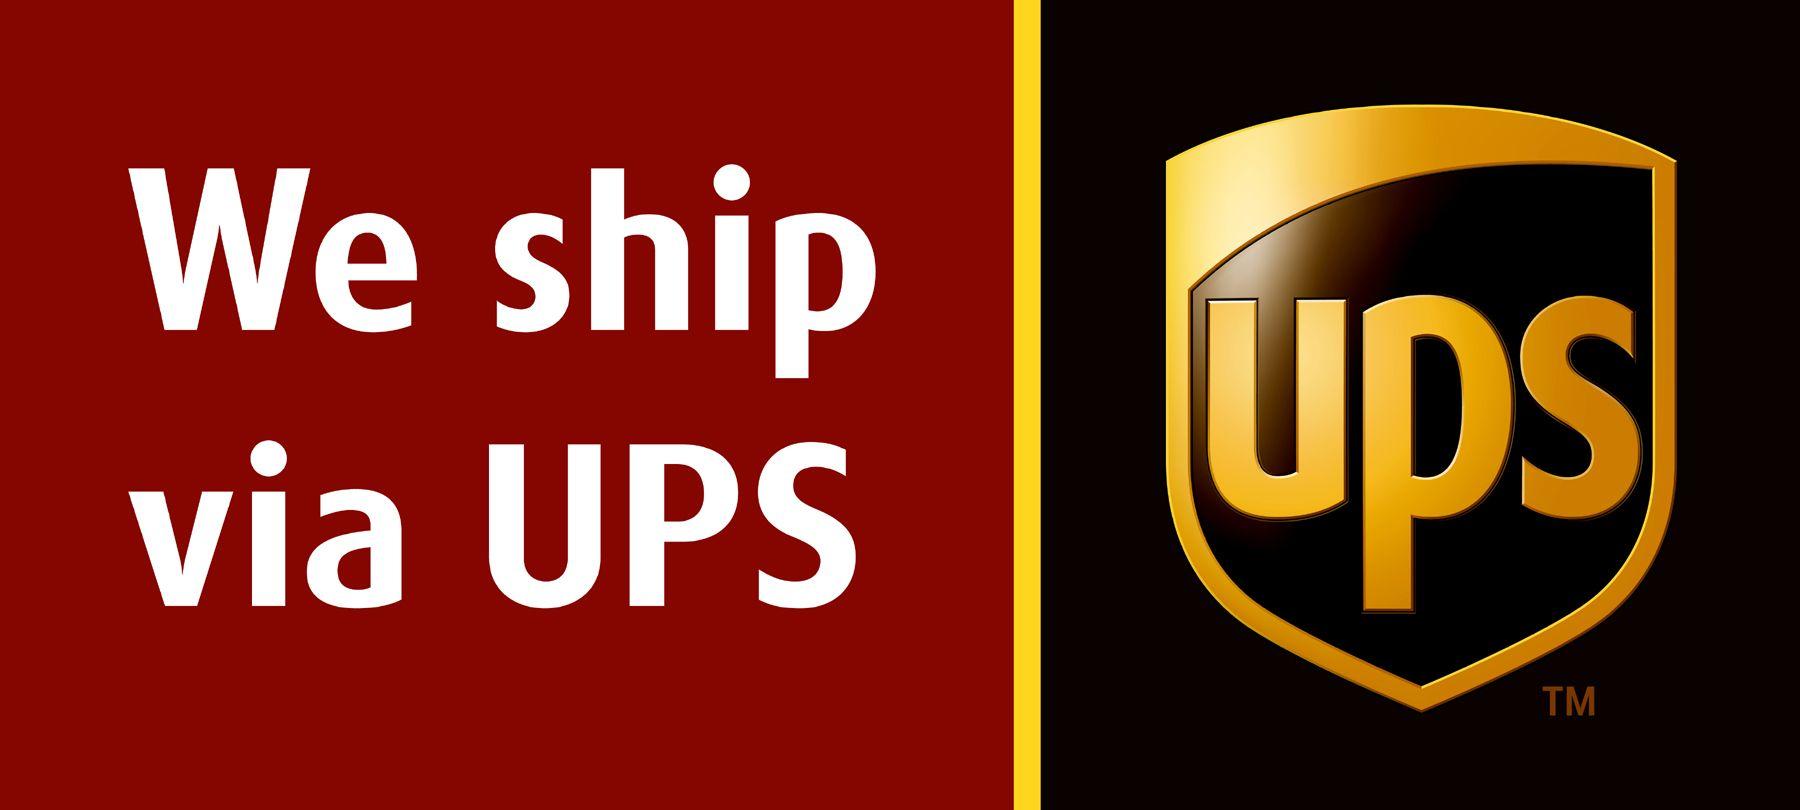 UPS Shield Logo - Ups Logos